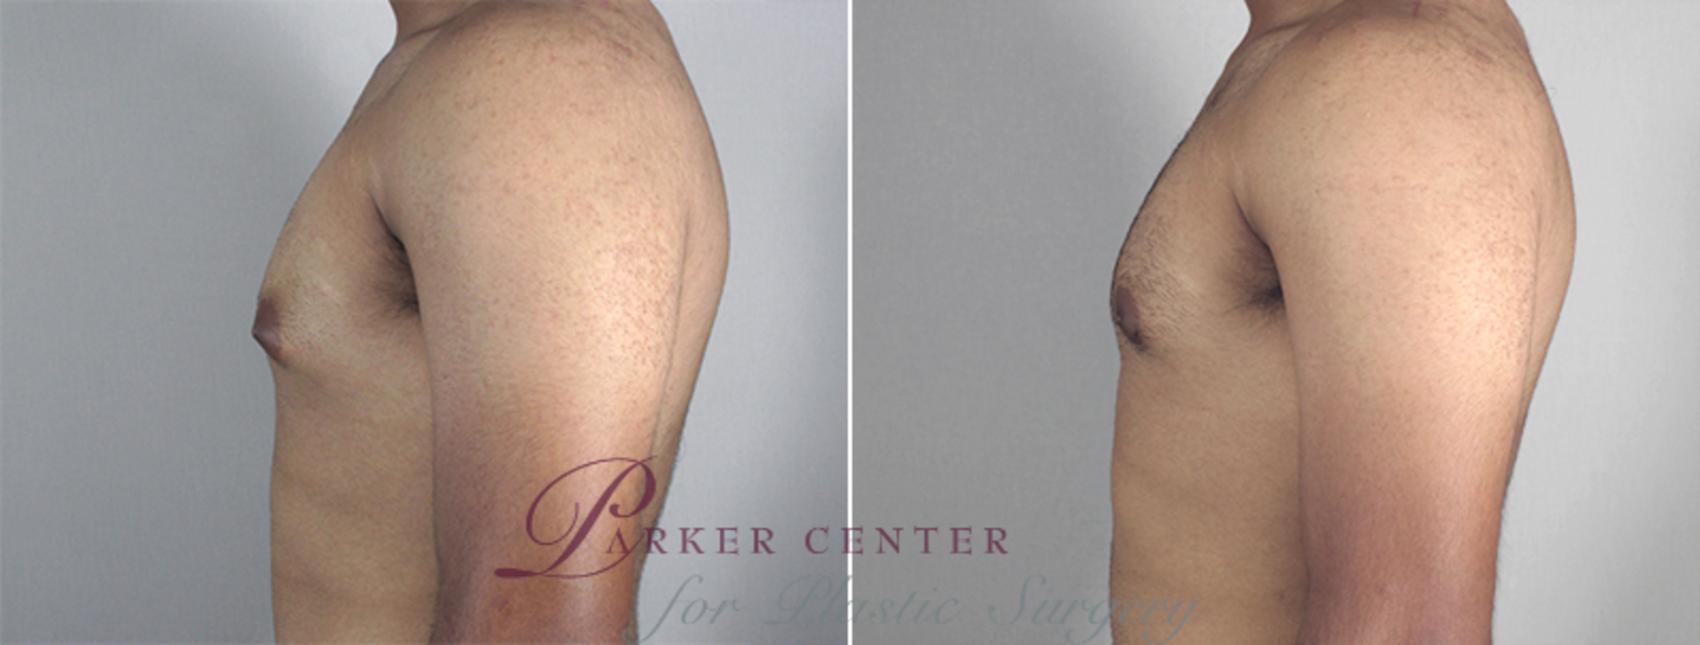 Gynecomastia Surgery Case 625 Before & After View #3 | Paramus, NJ | Parker Center for Plastic Surgery